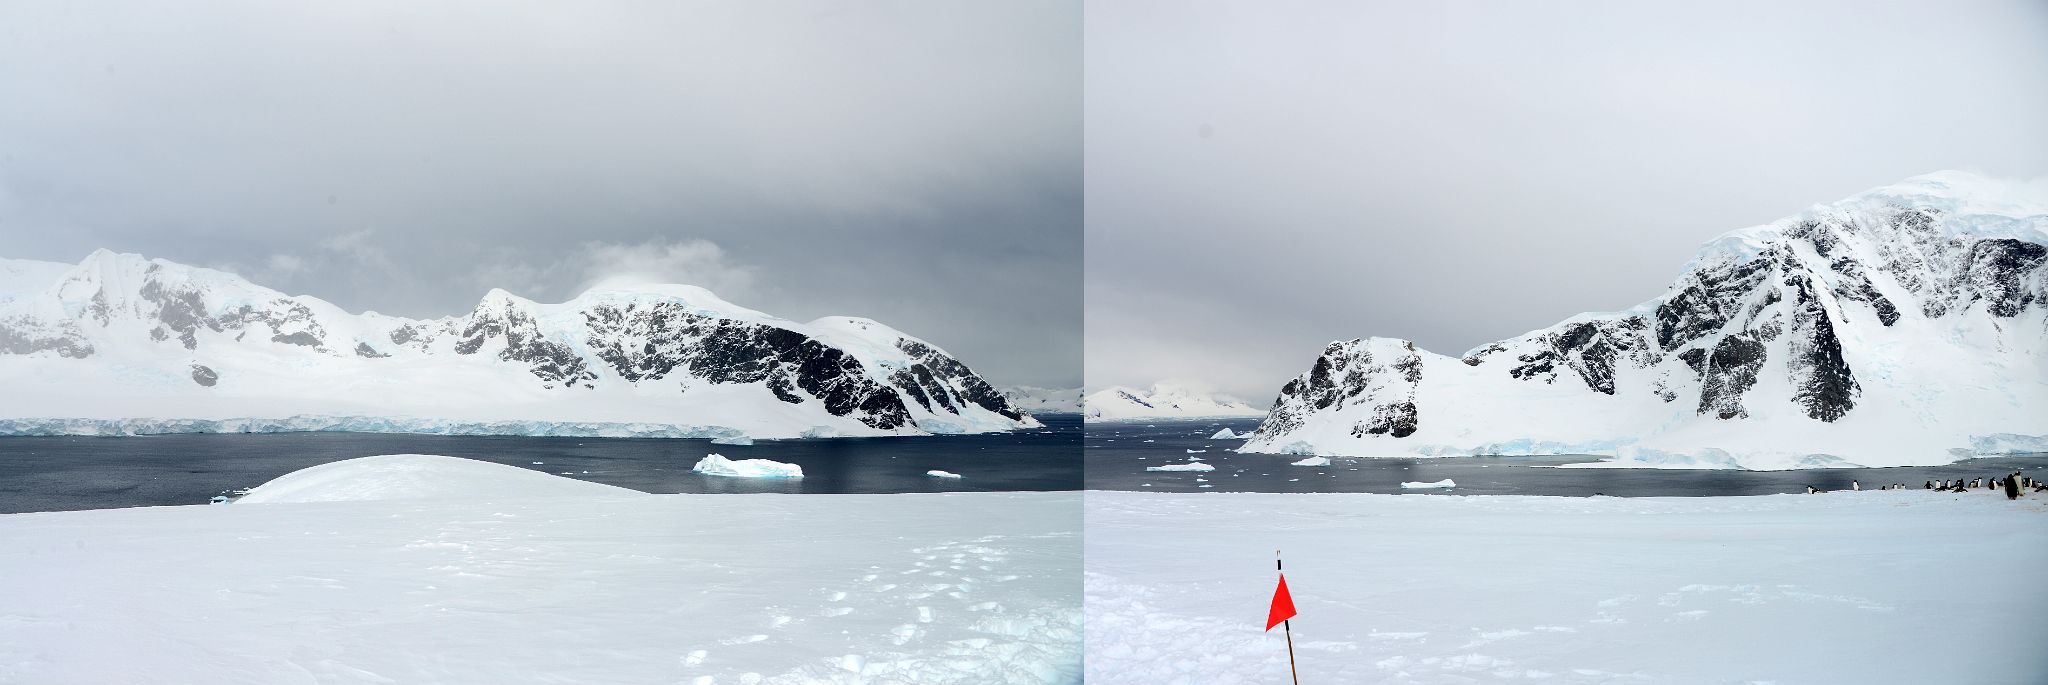 12C Arctowski Peninsula And Ronge Island From Top of Danco Island On Quark Expeditions Antarctica Cruise